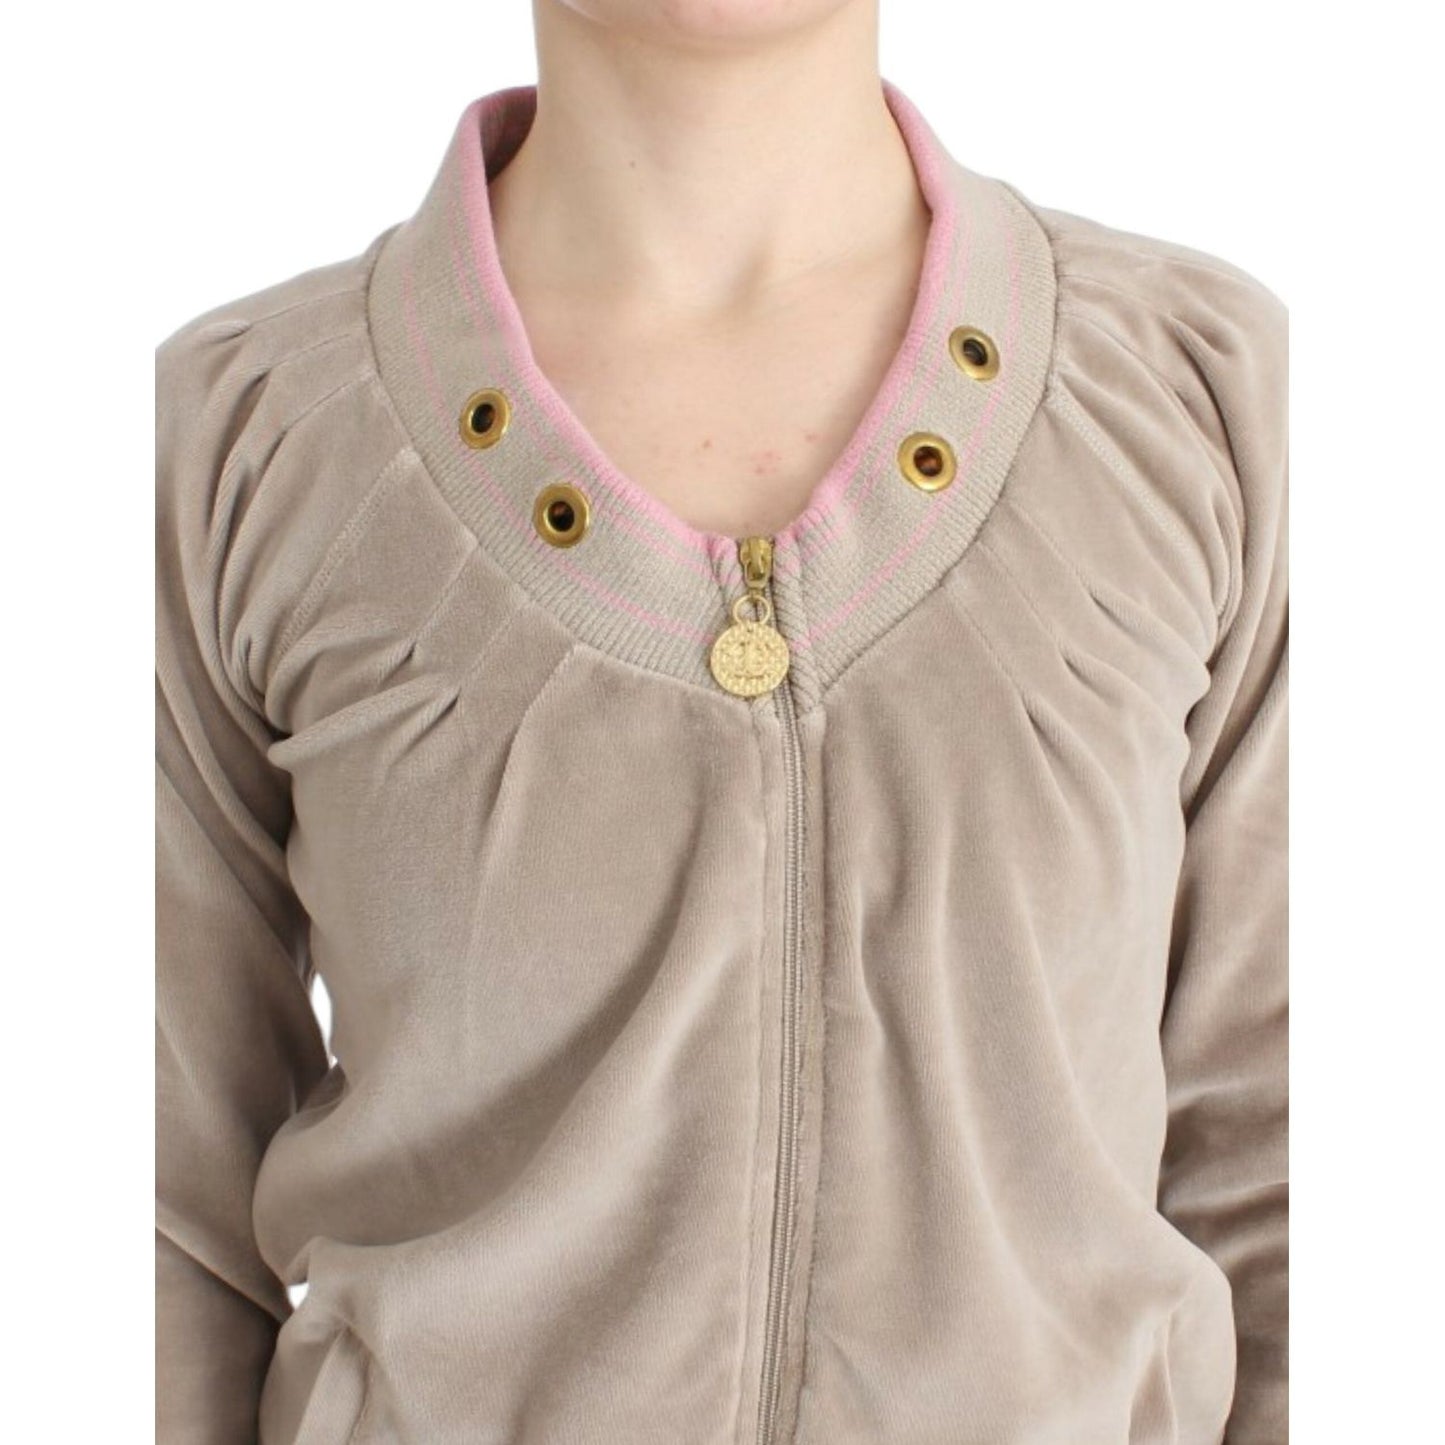 Cavalli Beige Zip Cardigan with Gold Tone Accents beige-velvet-zipup-sweater 9105-beige-velvet-zipup-sweater-4-scaled-5dec82a6-26b.jpg